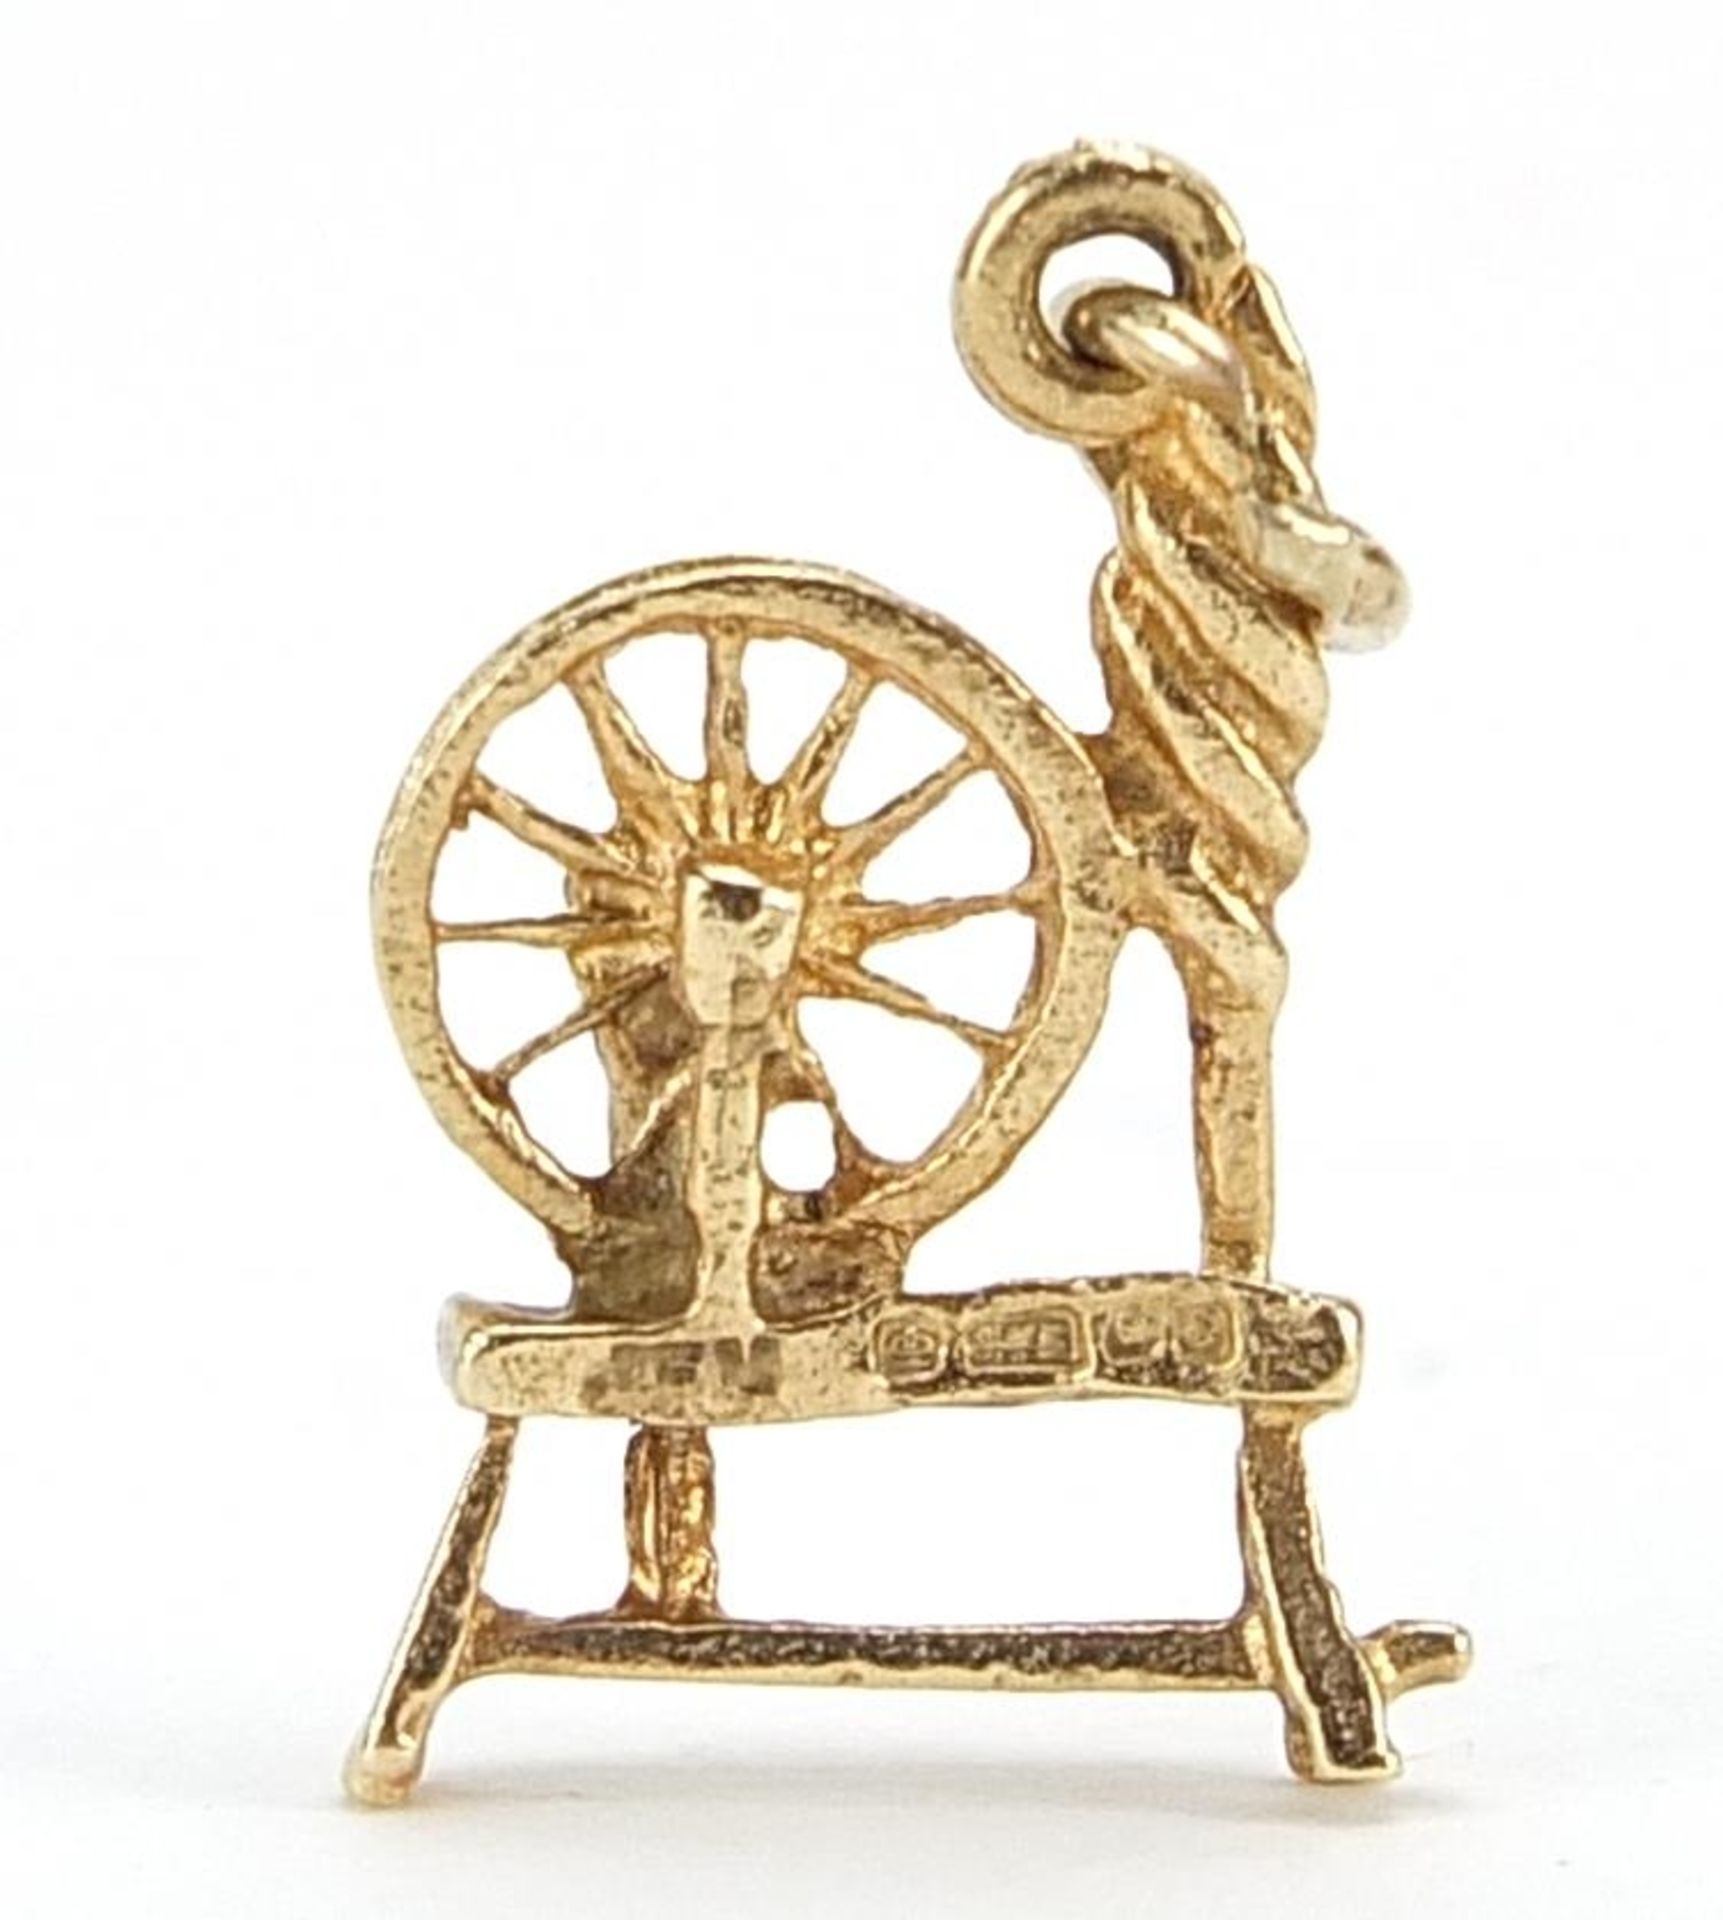 9ct gold spinning wheel charm, 1.8cm high, 1.2g